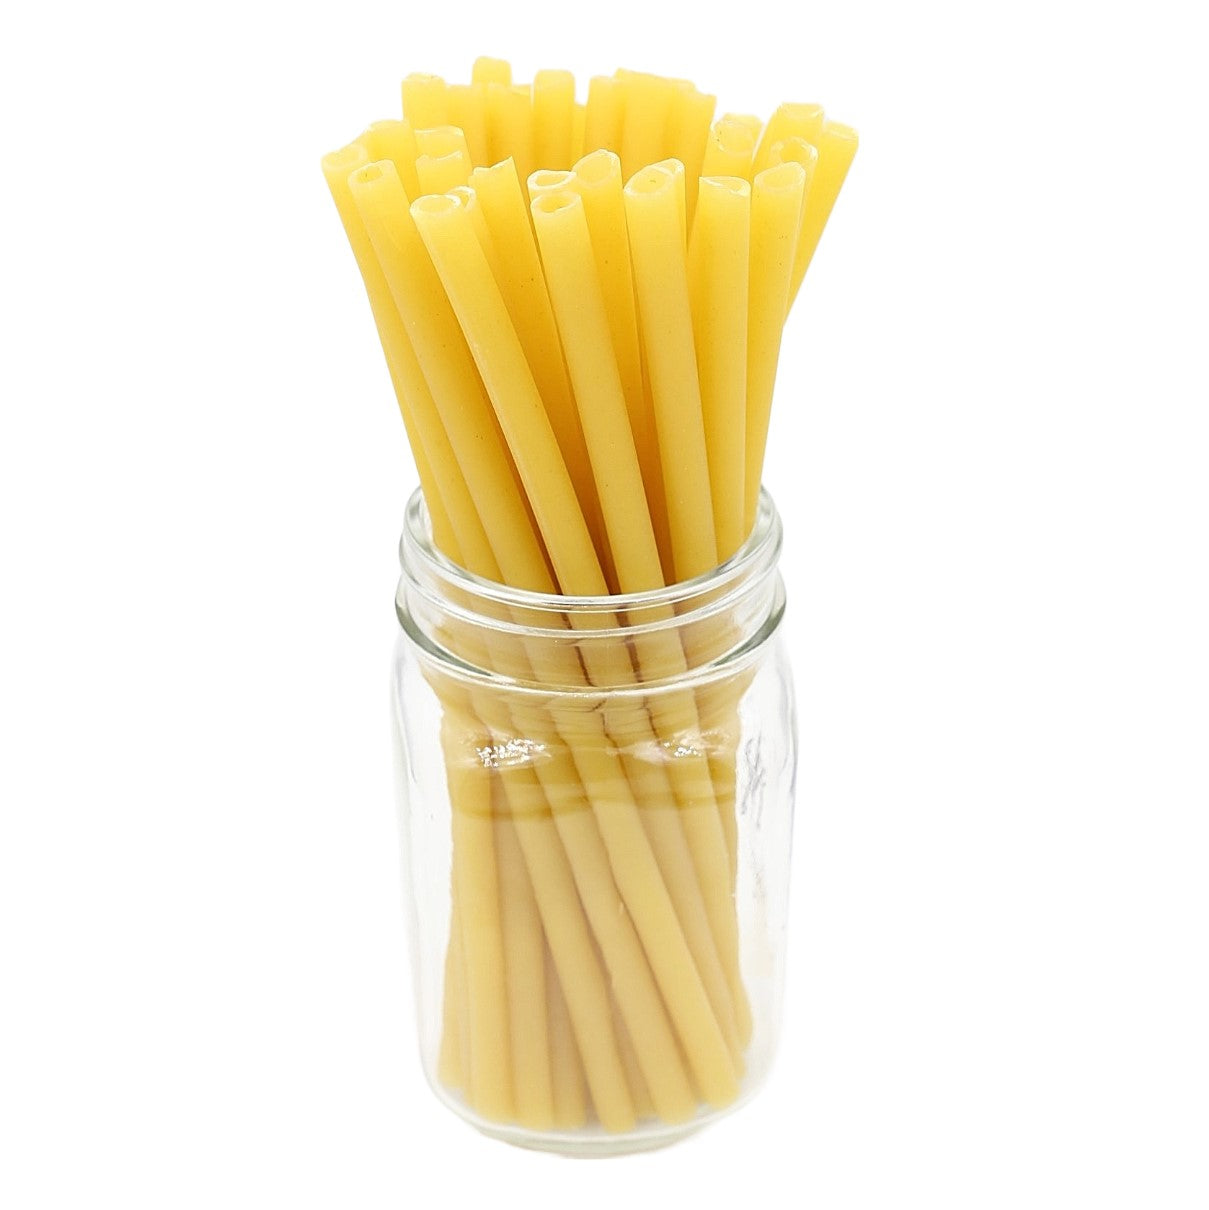 Pasta Straws, Paper Straws Alternative